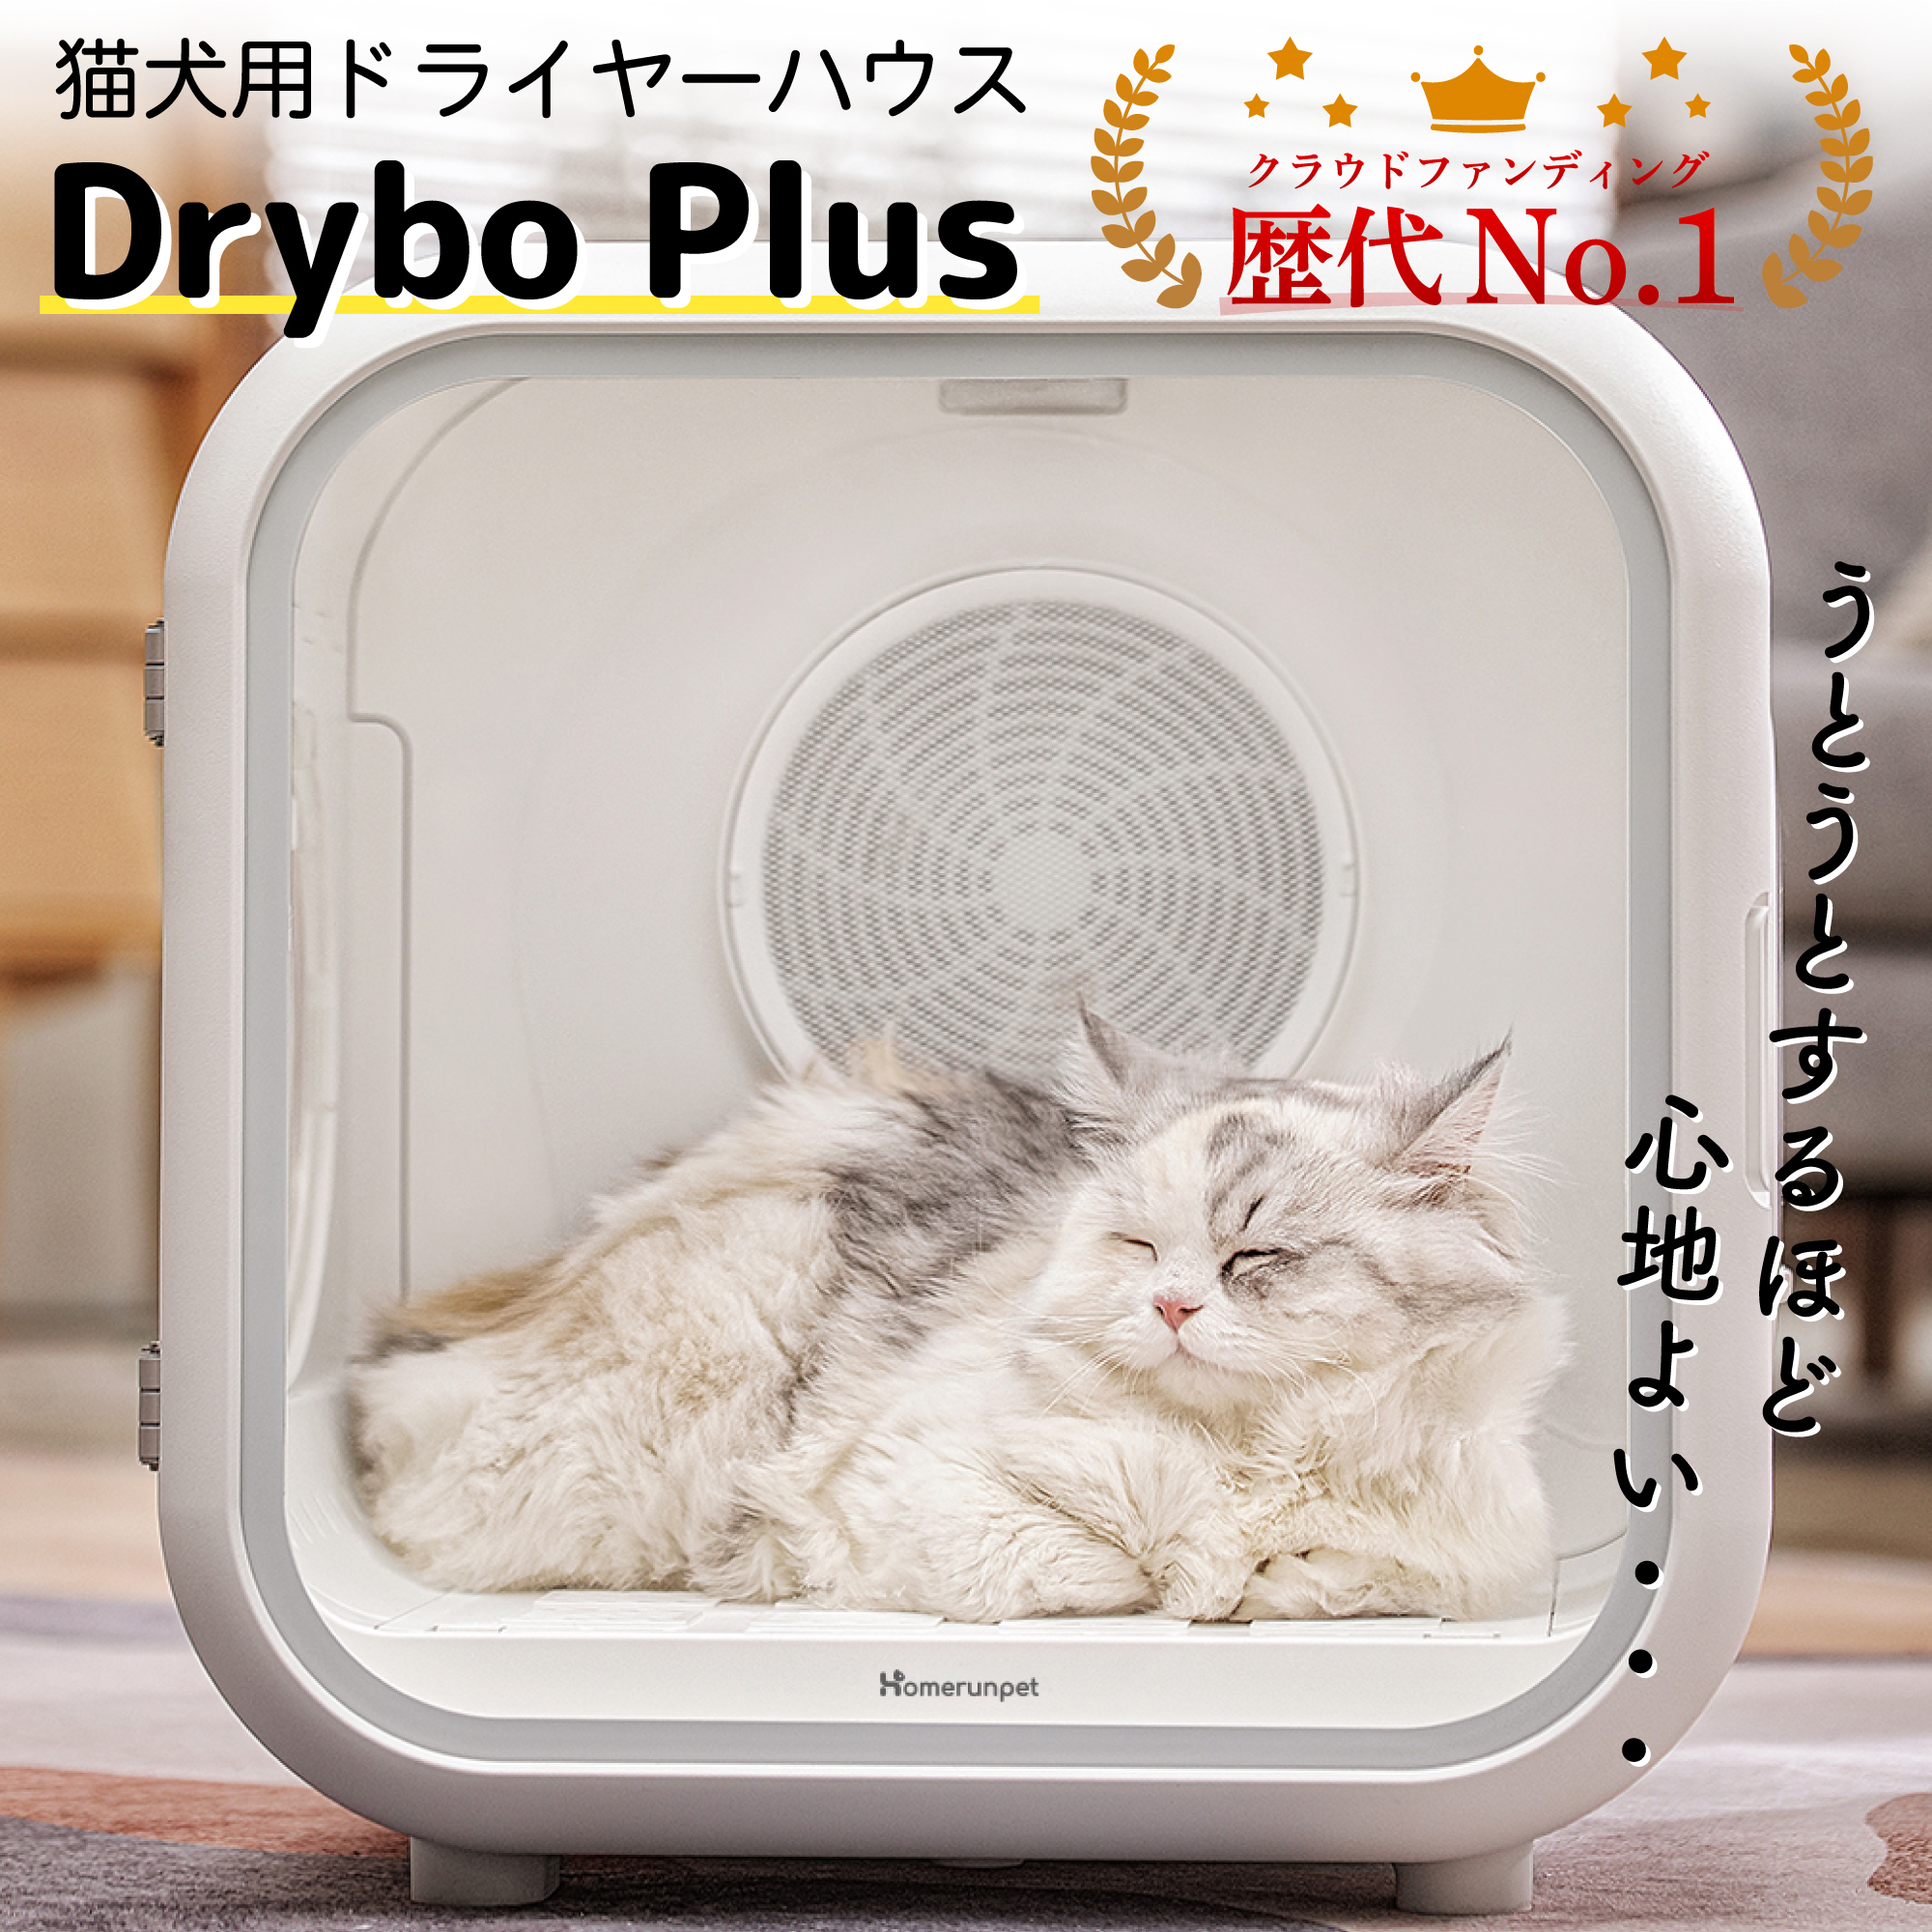 Drybo Plus ペットドライヤー ドライボプラス 静音 ハウス 犬 猫 